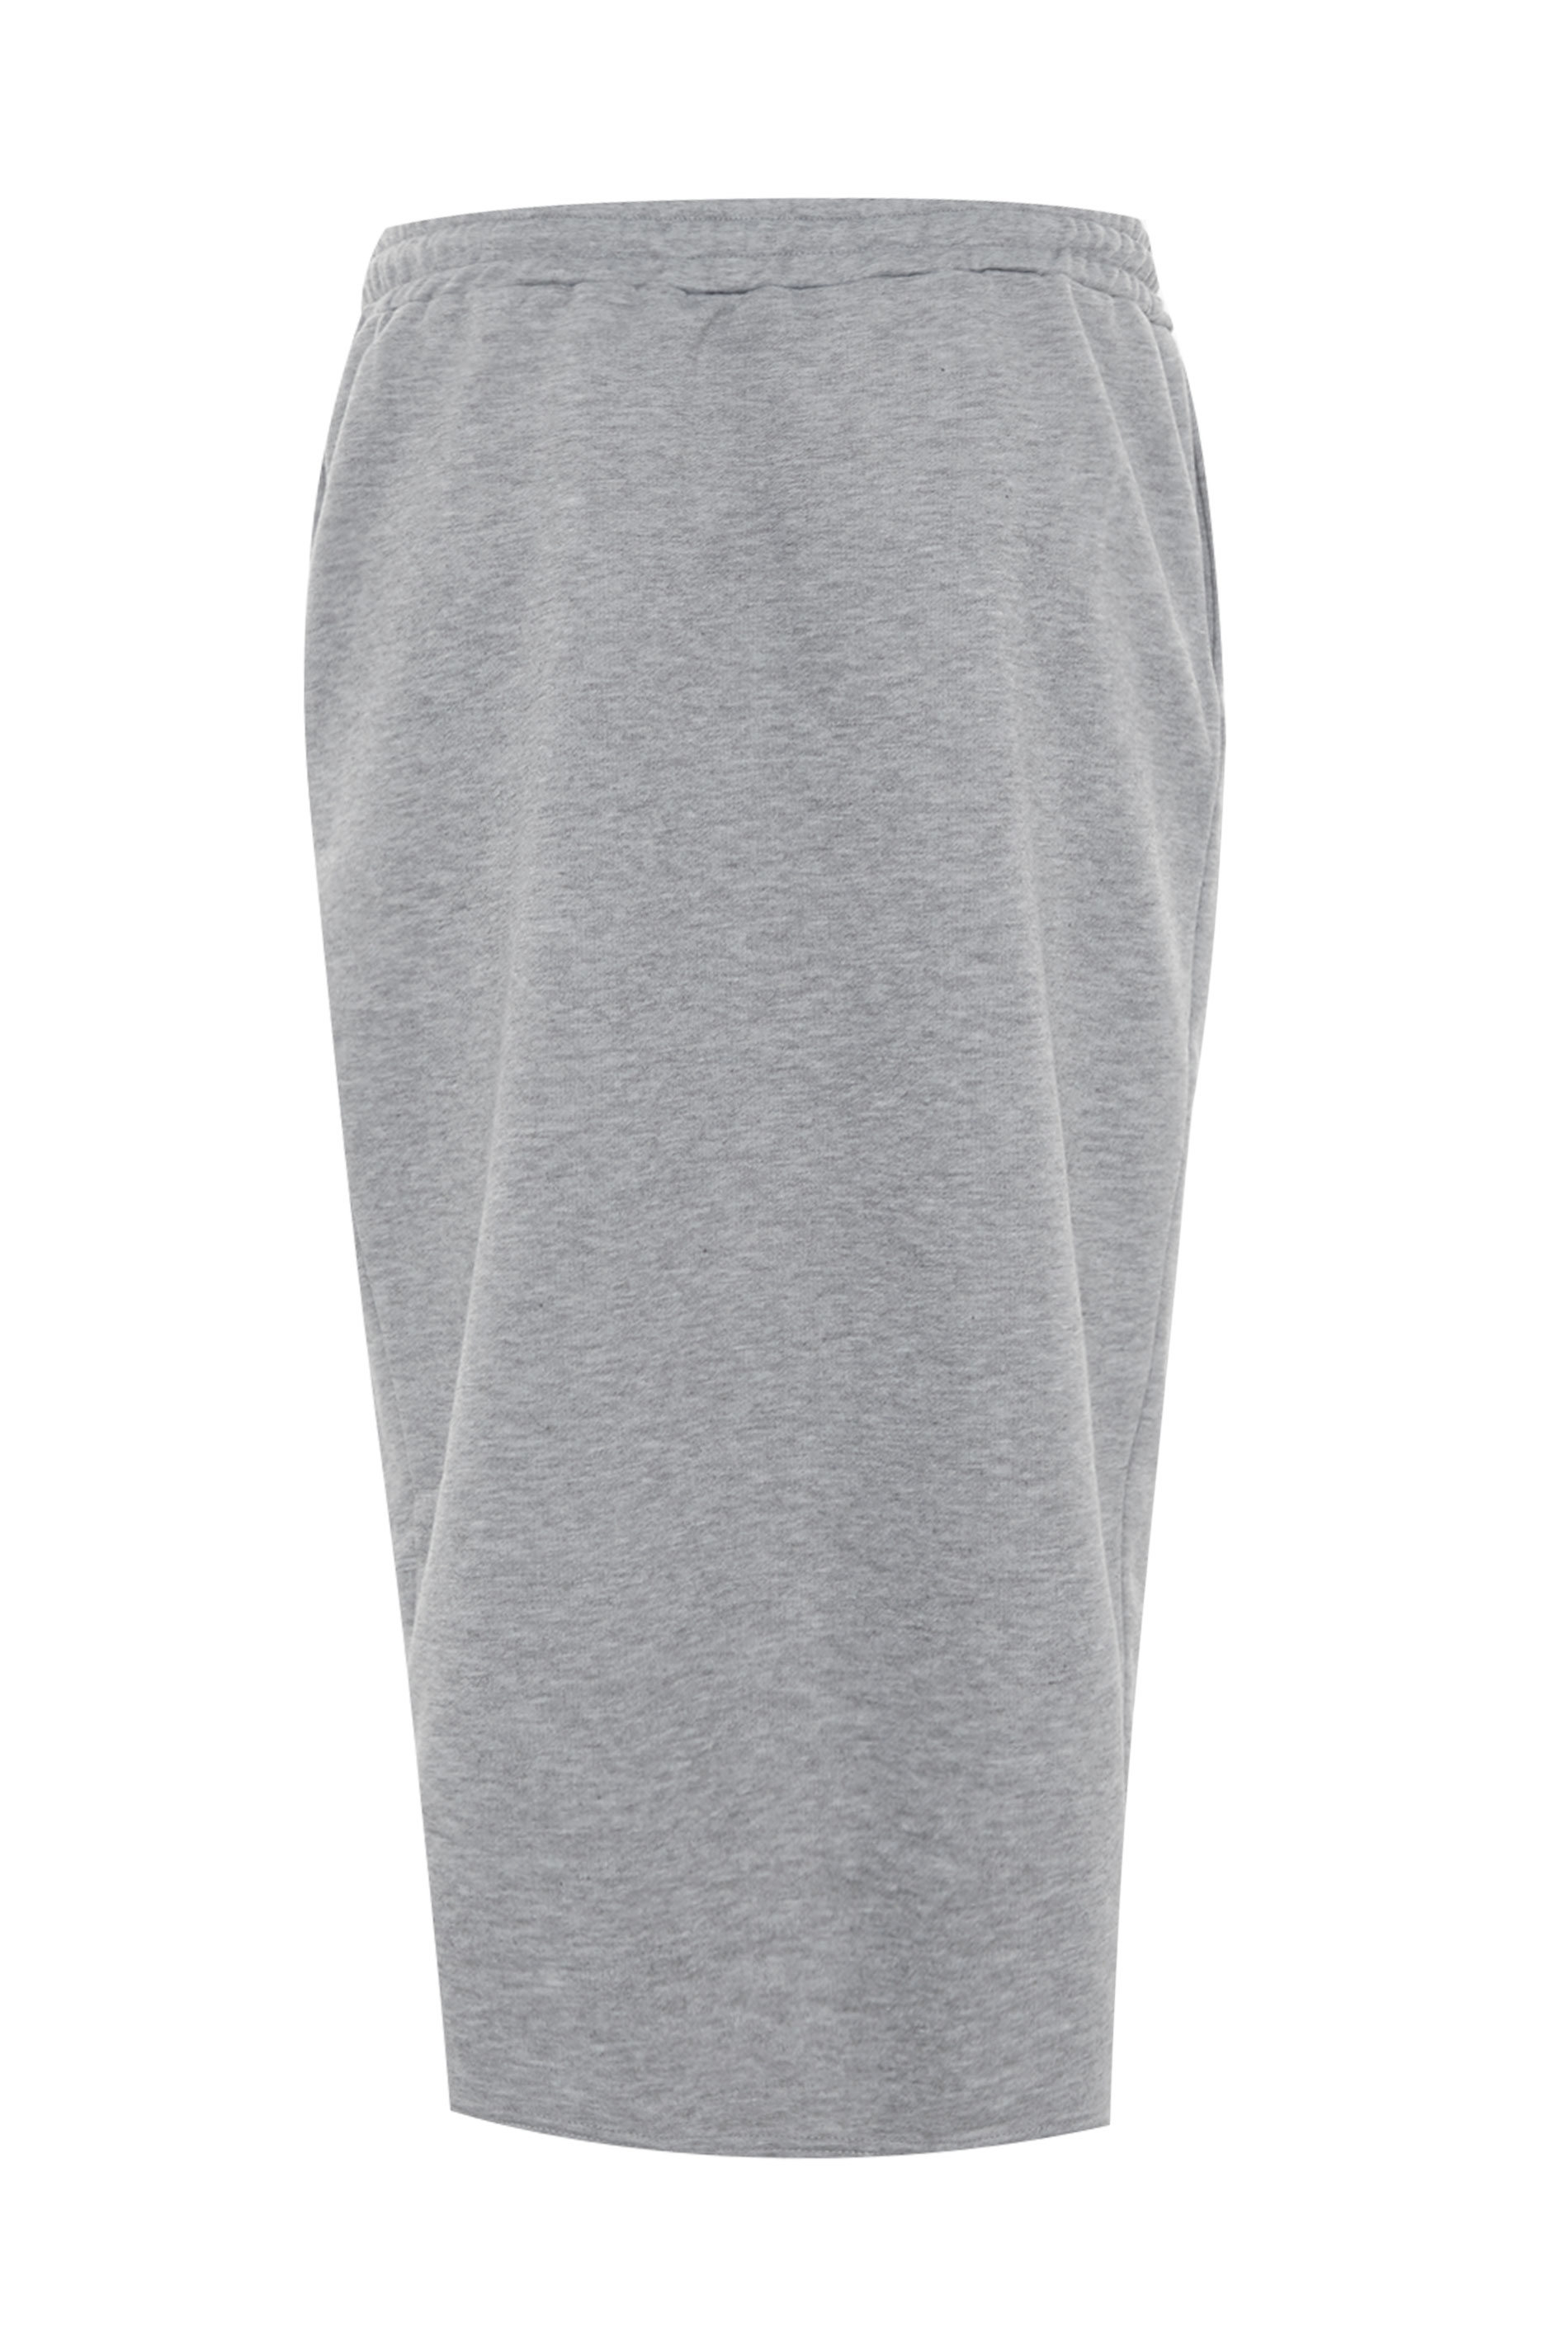 LTS Grey Marl Jersey Sweat Skirt | Long Tall Sally